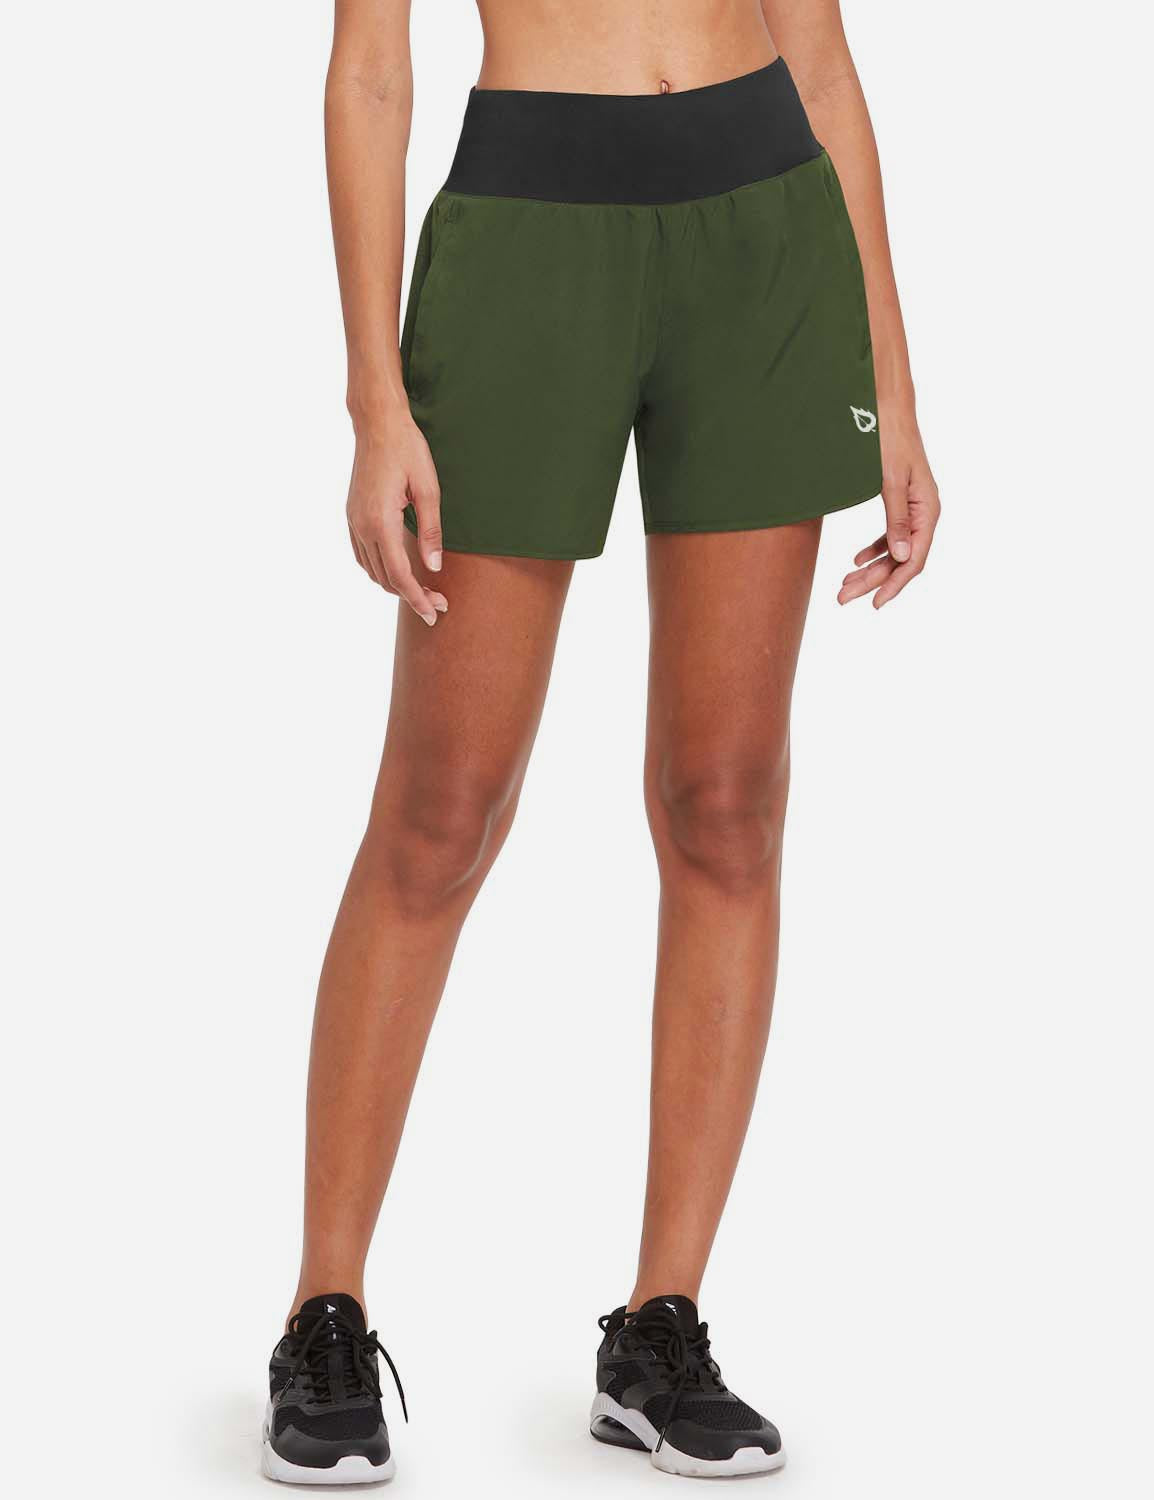 Baleaf Women's 5" High Rise Split-leg Pocketed Running Shorts abd394 Army Green Front